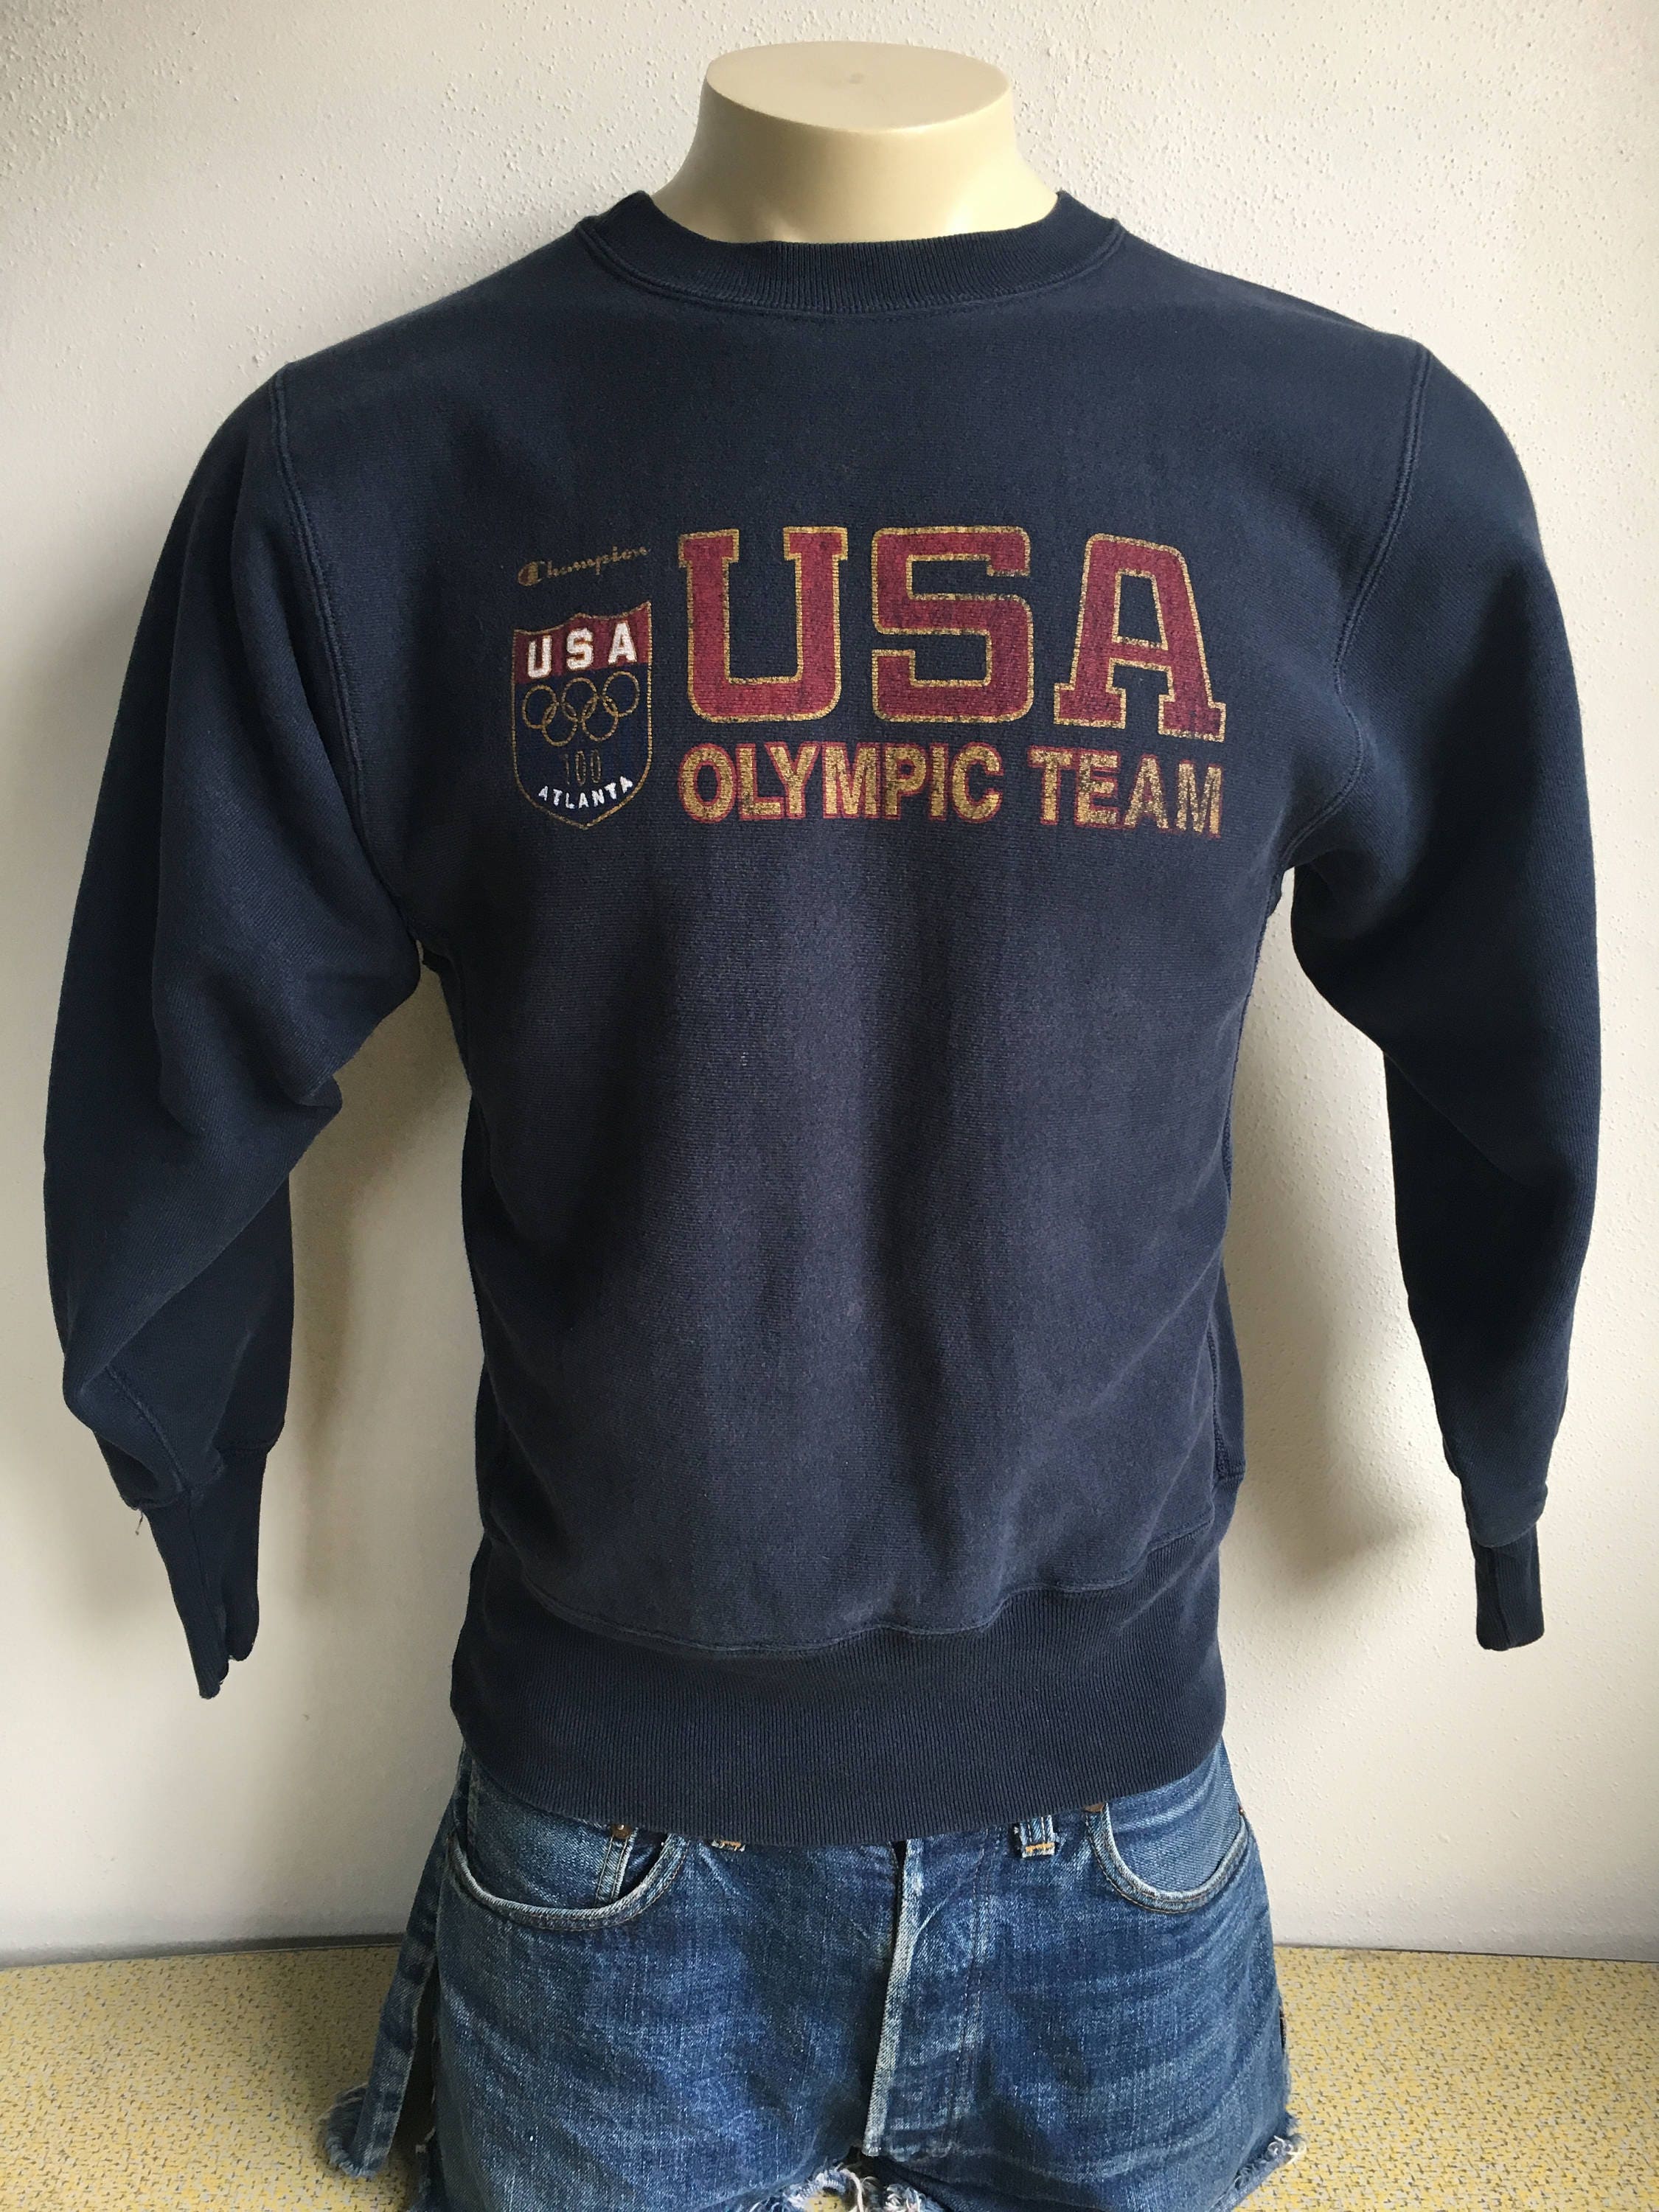 USA Olympic Atlanta Team 1996 Vintage Sweater 90s Etsy